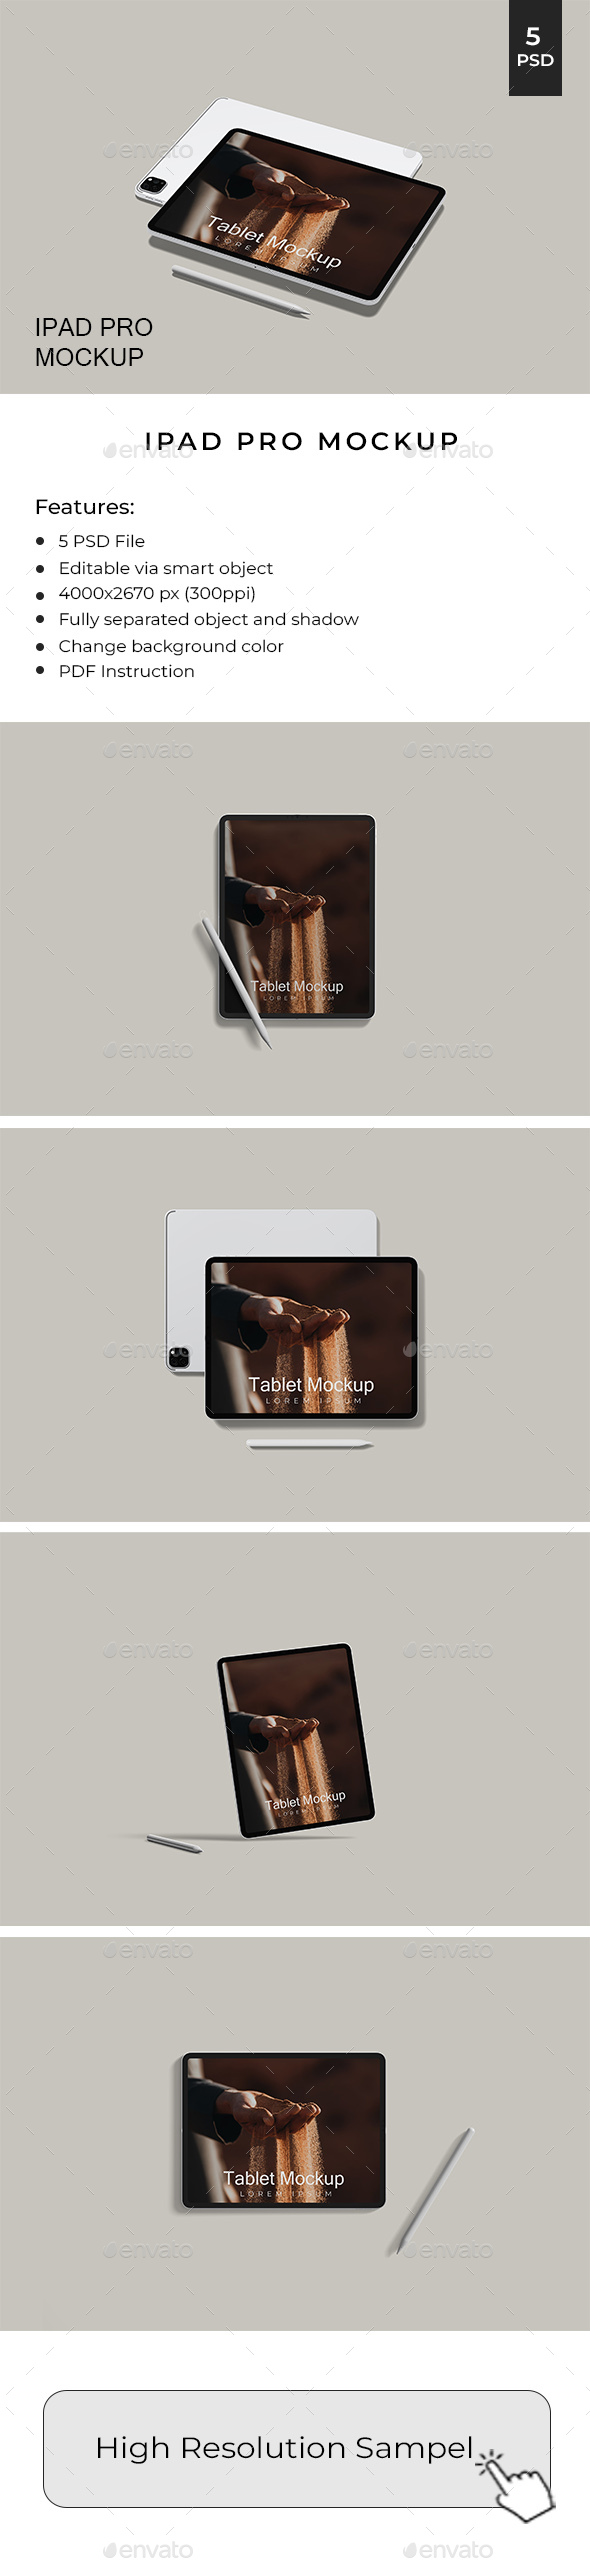 iPad Pro Screen Mockup